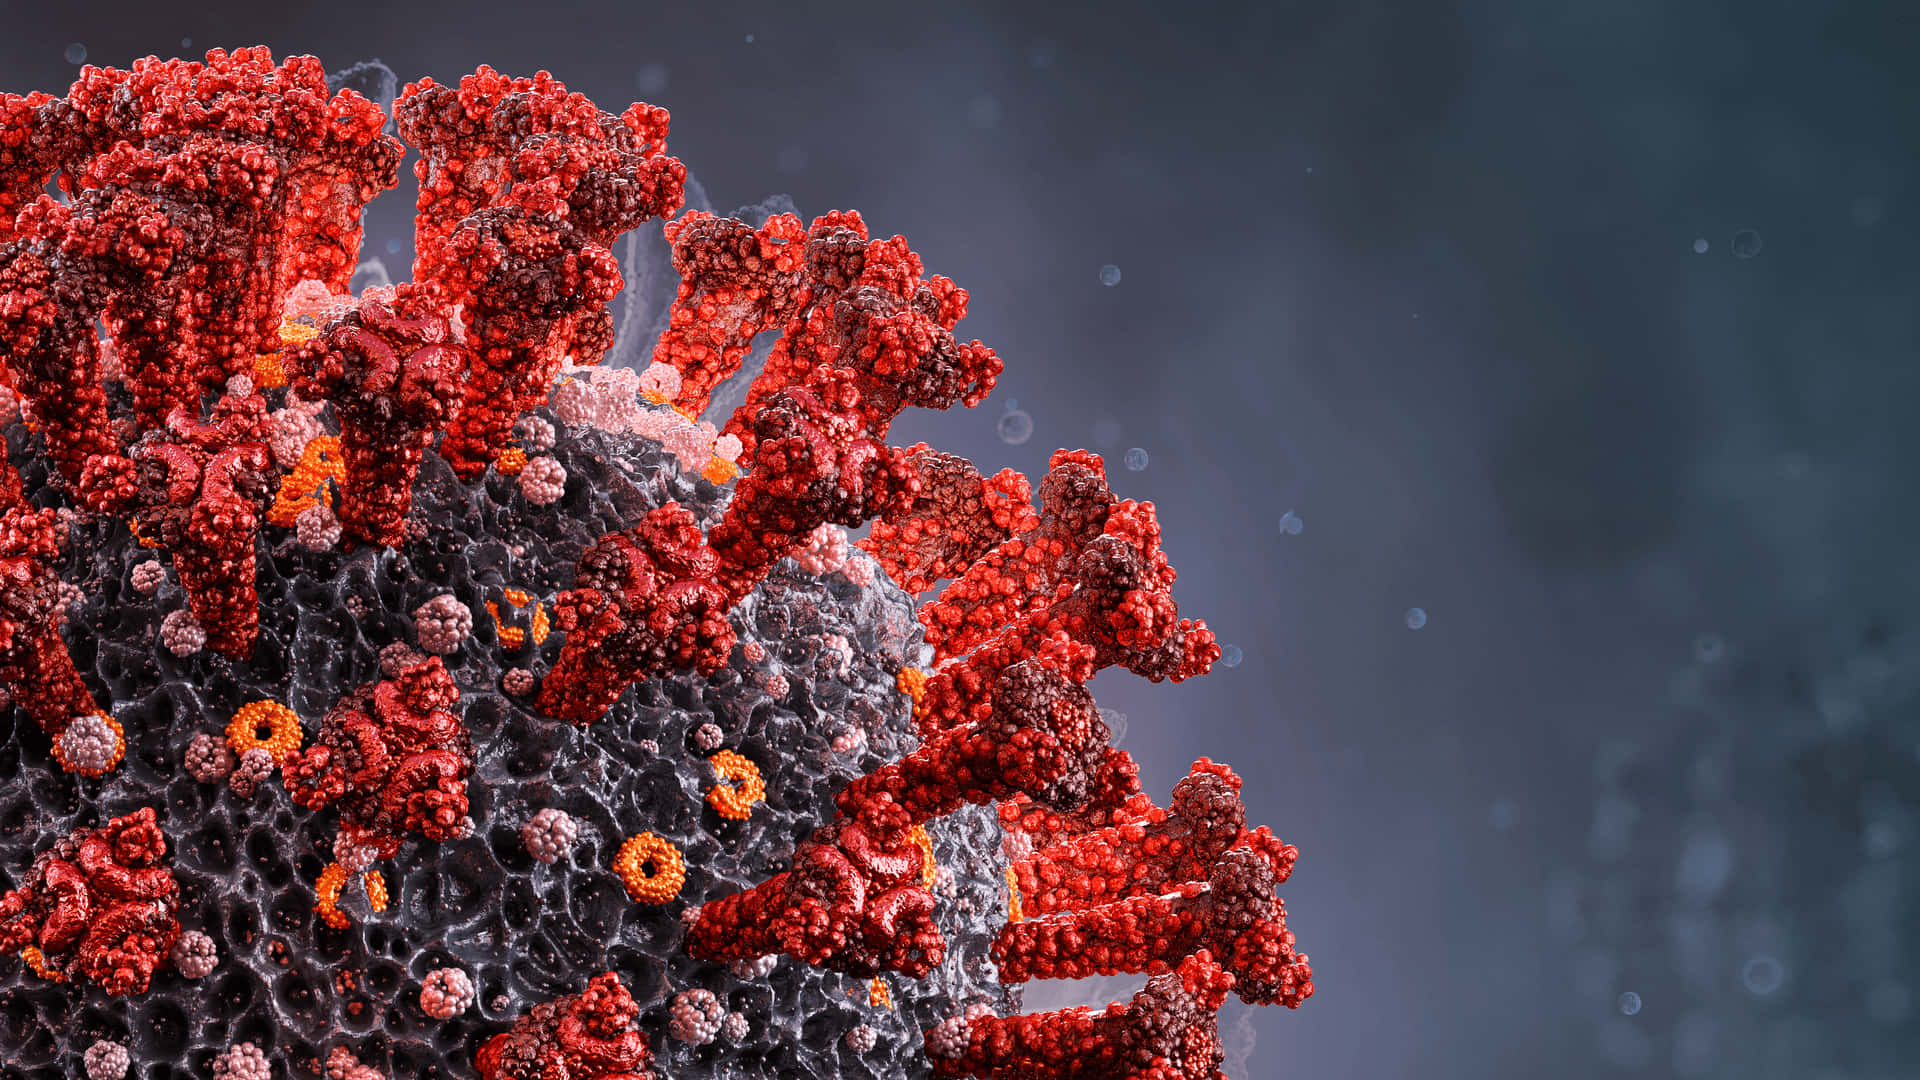 Coronavirus Virus In A Red And Black Background